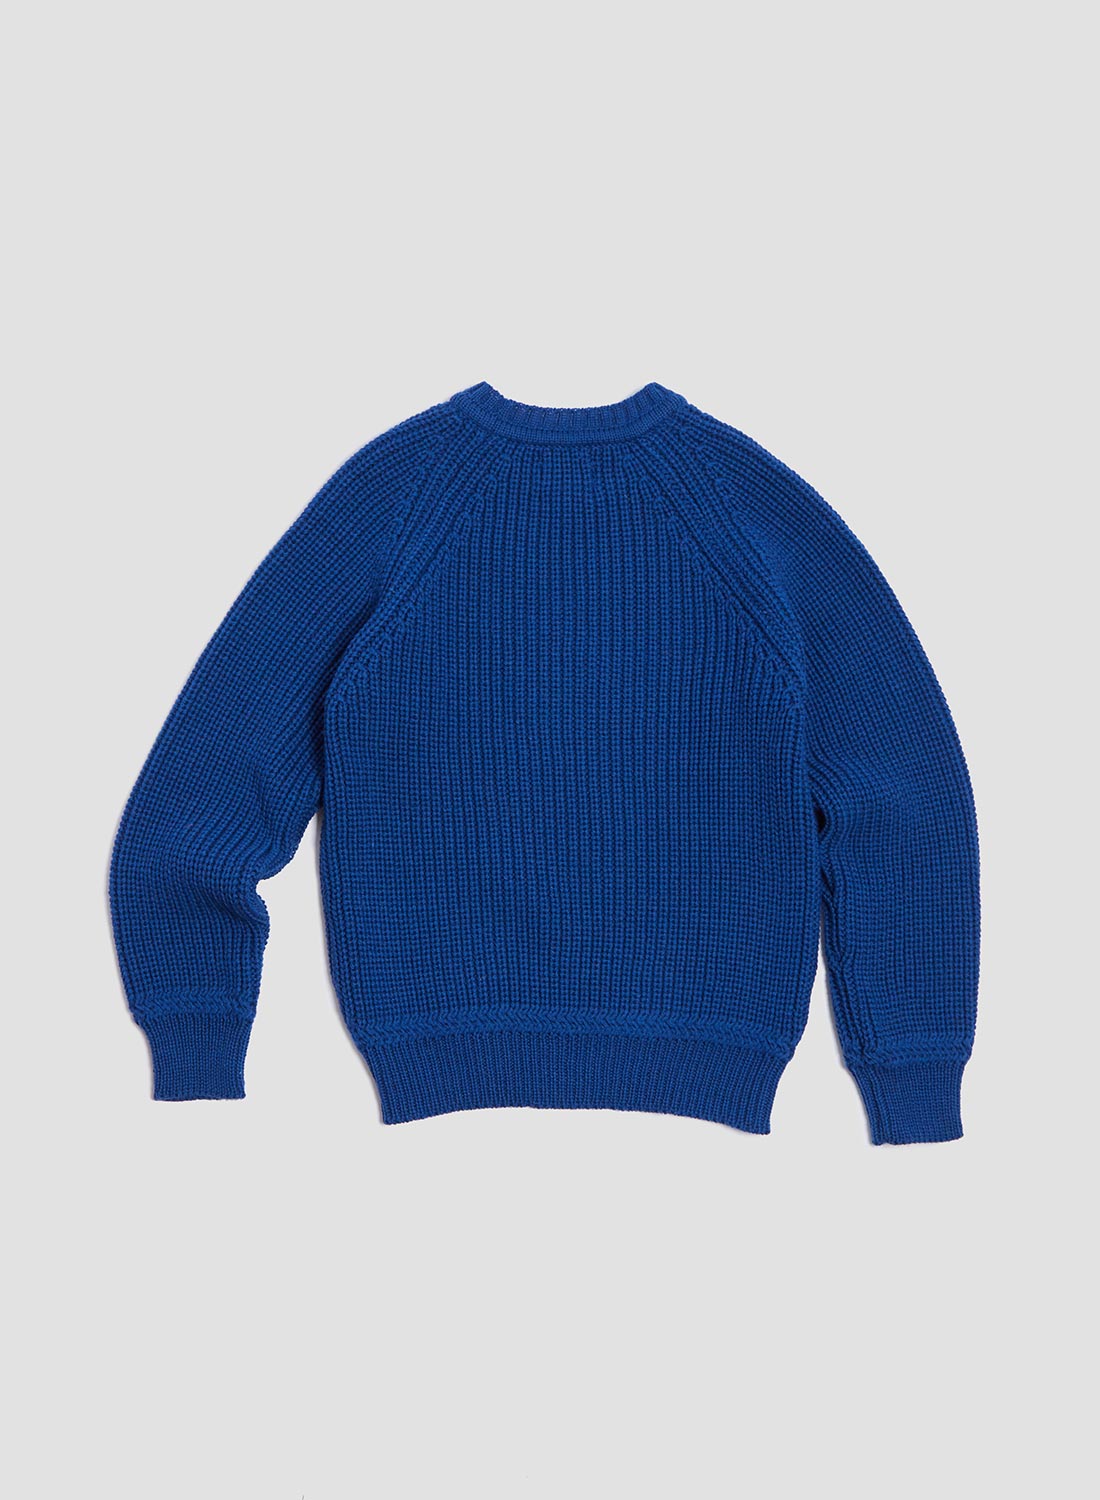 Fisherman Sweater in Giotto – Nigel Cabourn